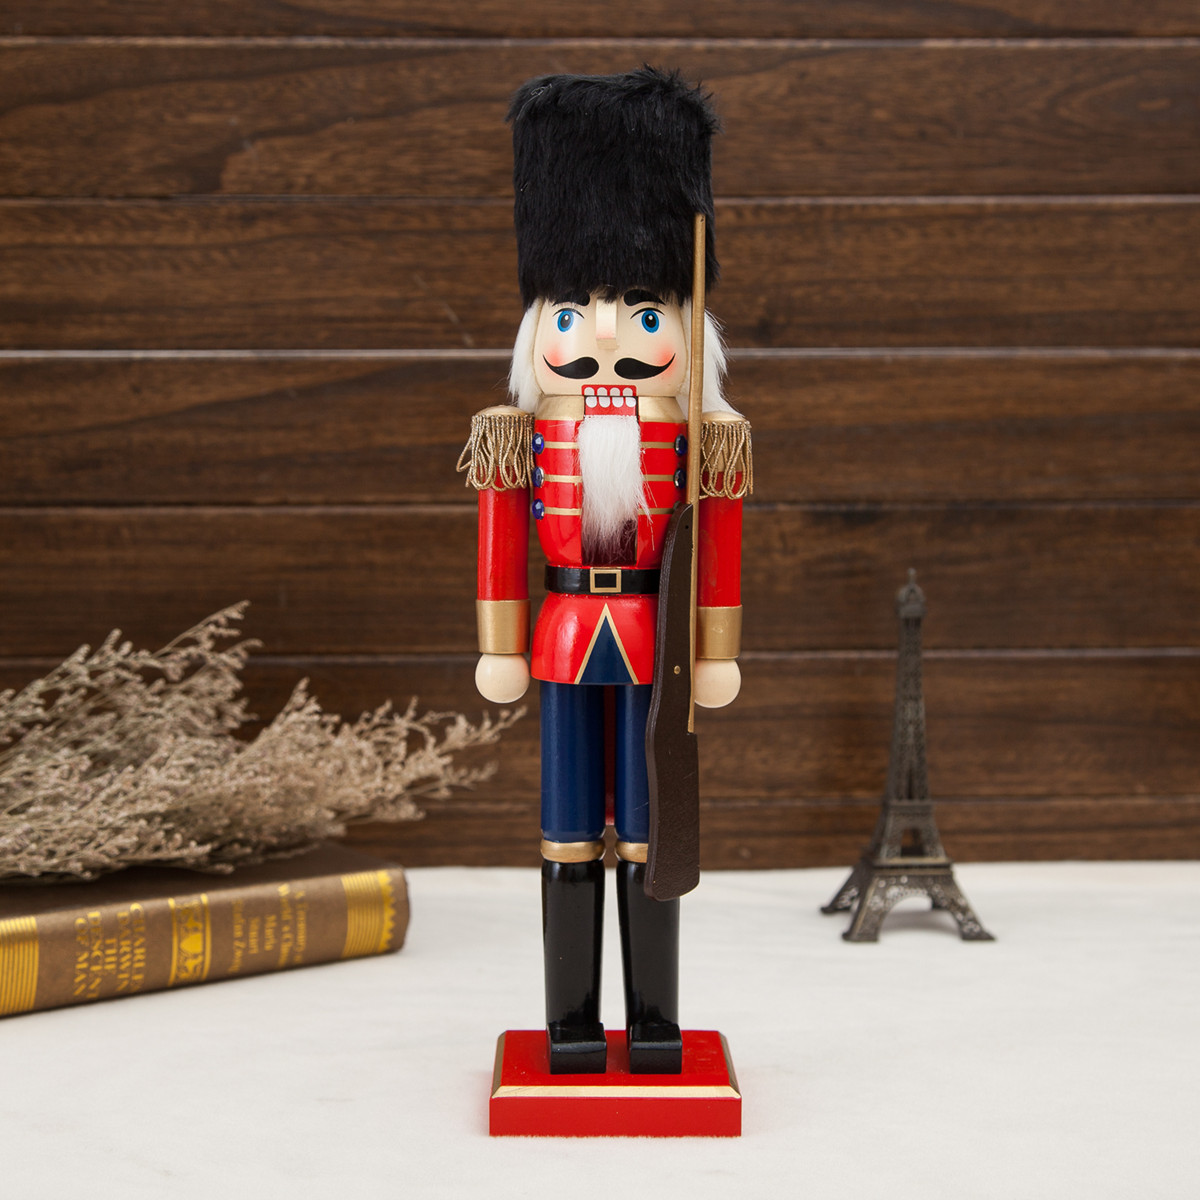 38cm-Wooden-Nutcracker-Doll-Soldier-Vintage-Handcraft-Decoration-Christmas-Gifts-1394894-7